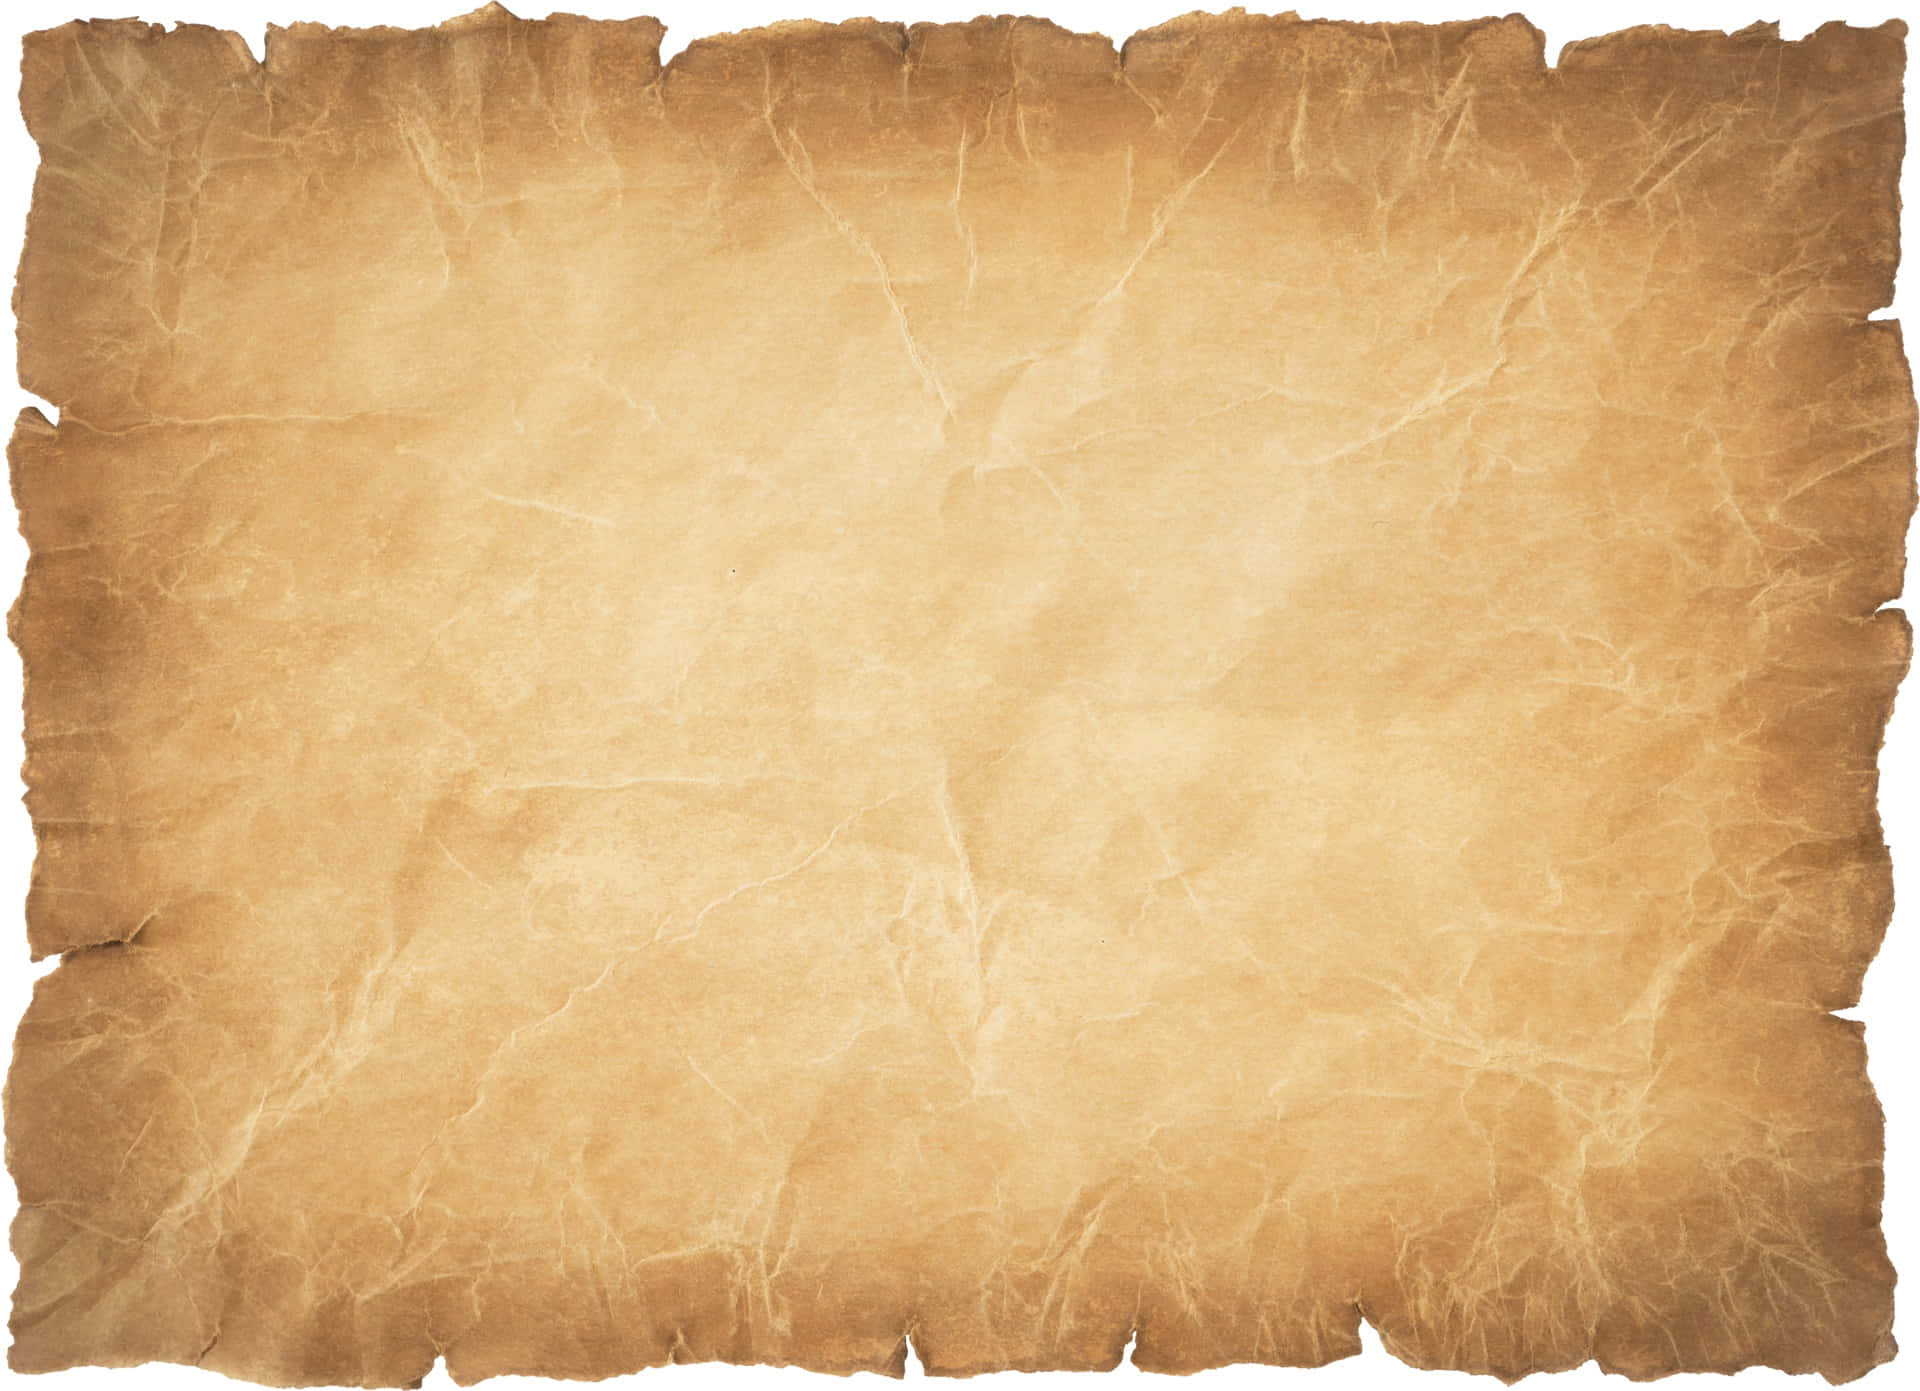 Parchment Background With Burnt Edges